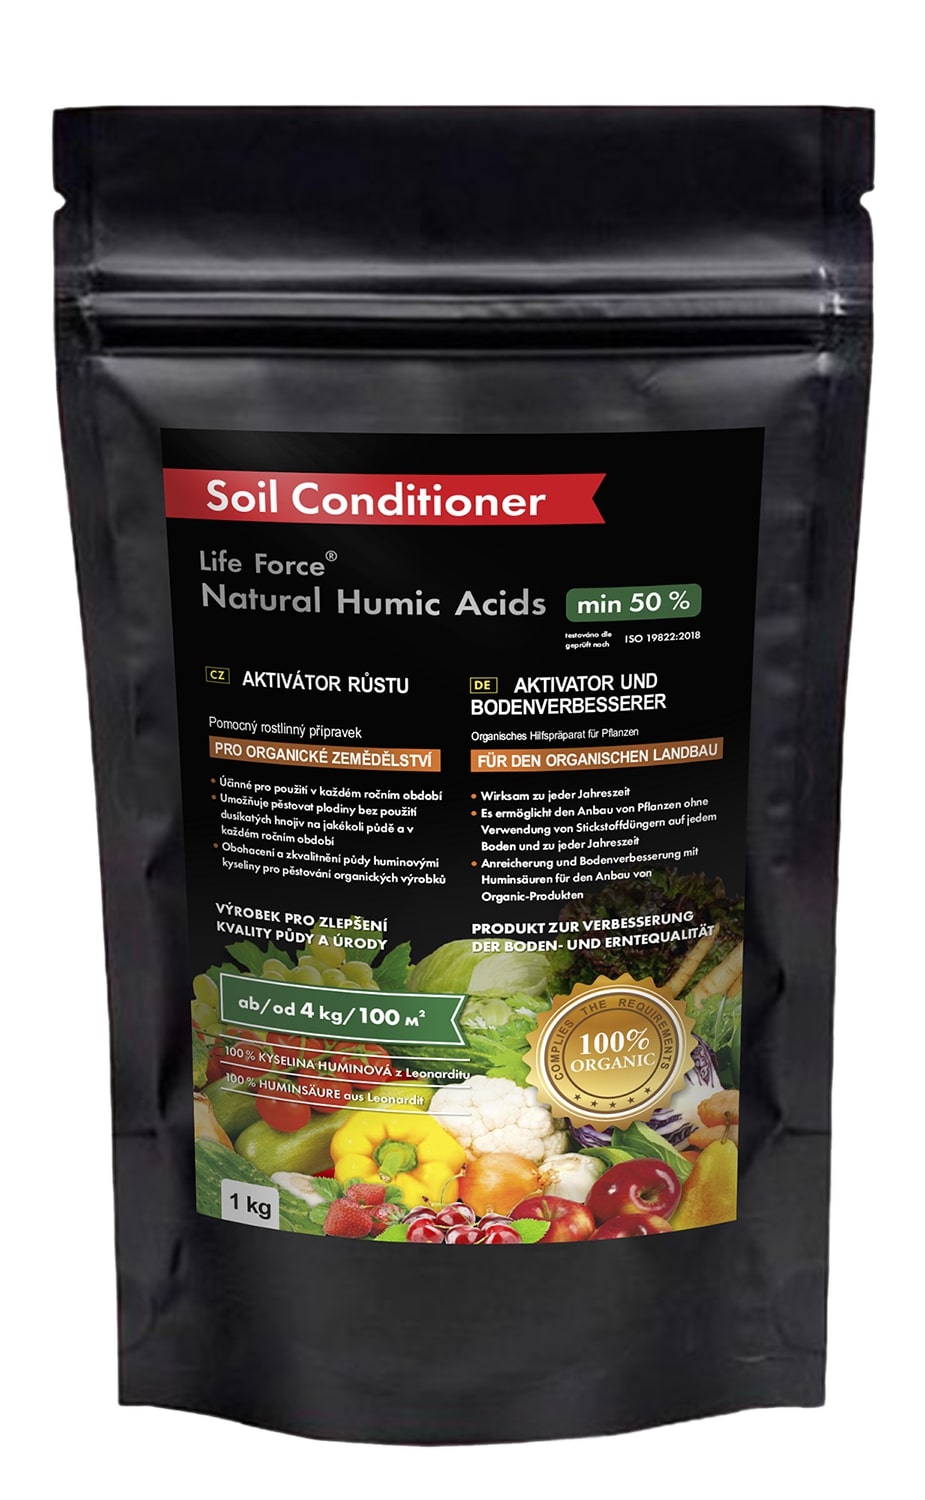 Natural Humic Acids pro eco_1 kg